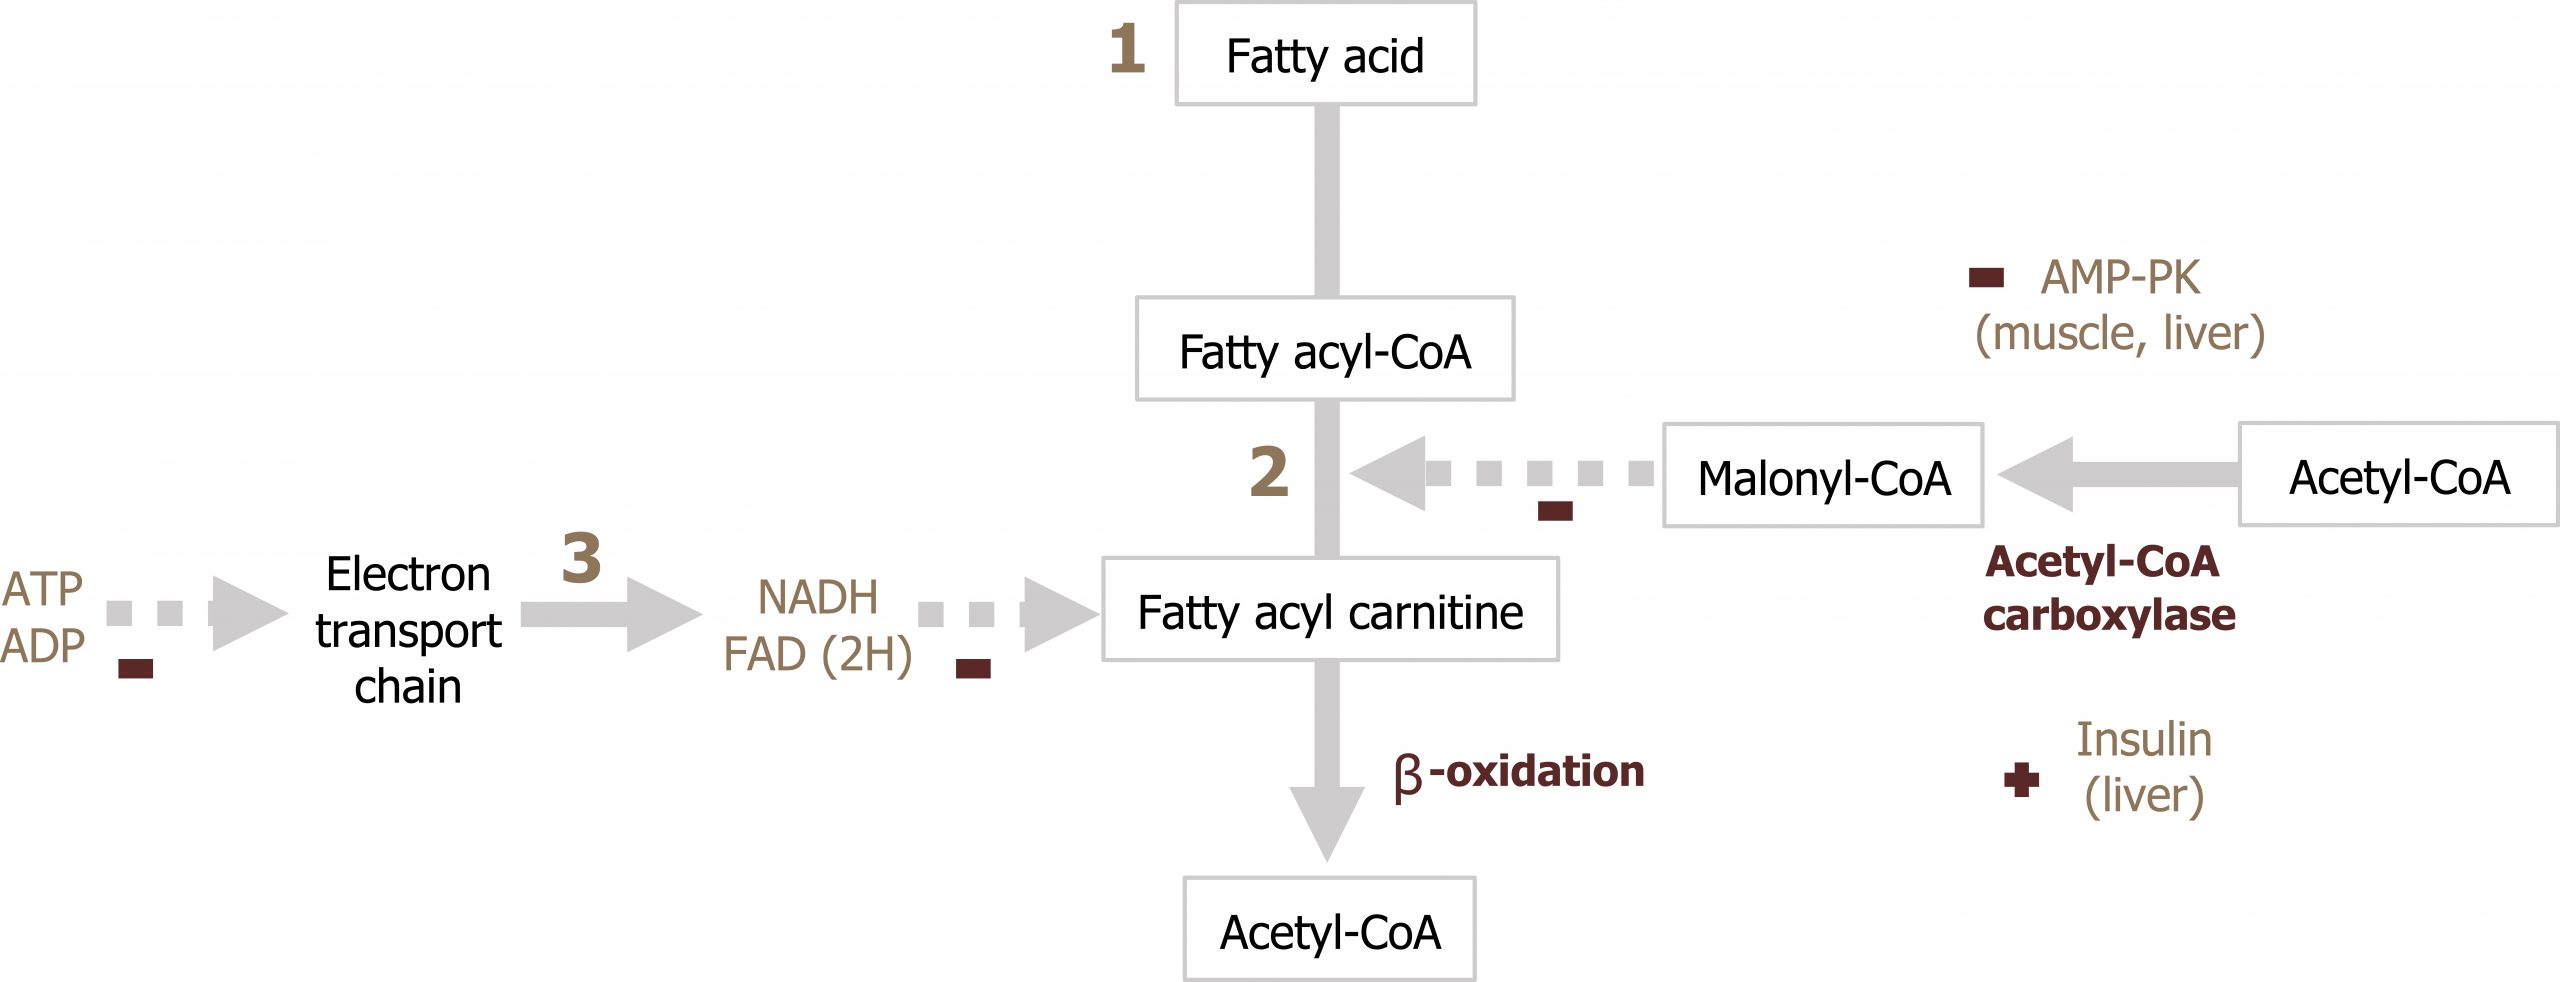 1: Fatty acid down arrow to fatty acyl-CoA arrow fatty acyl carnitine arrow with text β-oxidation to acetyl-CoA. 2: Acetyl-CoA left arrow with enzyme acetyl-CoA carboxylase to malonyl-CoA arrow in between fatty acyl-CoA and fatty acyl carnitine. AMP-PK (muscle, liver) inhibits and insulin (liver) activates acetyl-CoA carboxylase 3: ATP right arrow to electron transport chain arrow NADH arrow fatty acyl carnitine. ADP and FAD(2H) inhibit pathway.